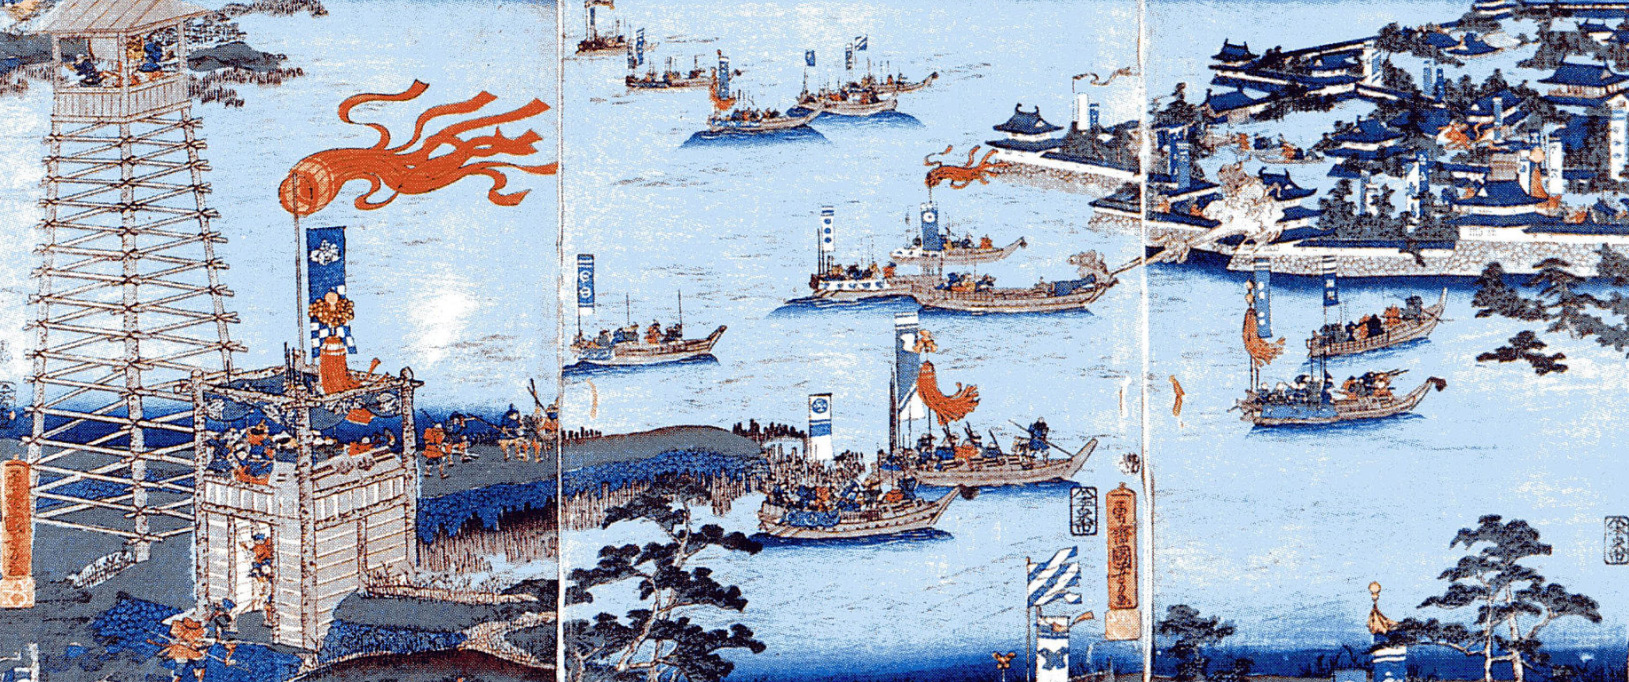 Edo period portrait of Takamatsu submerged in water